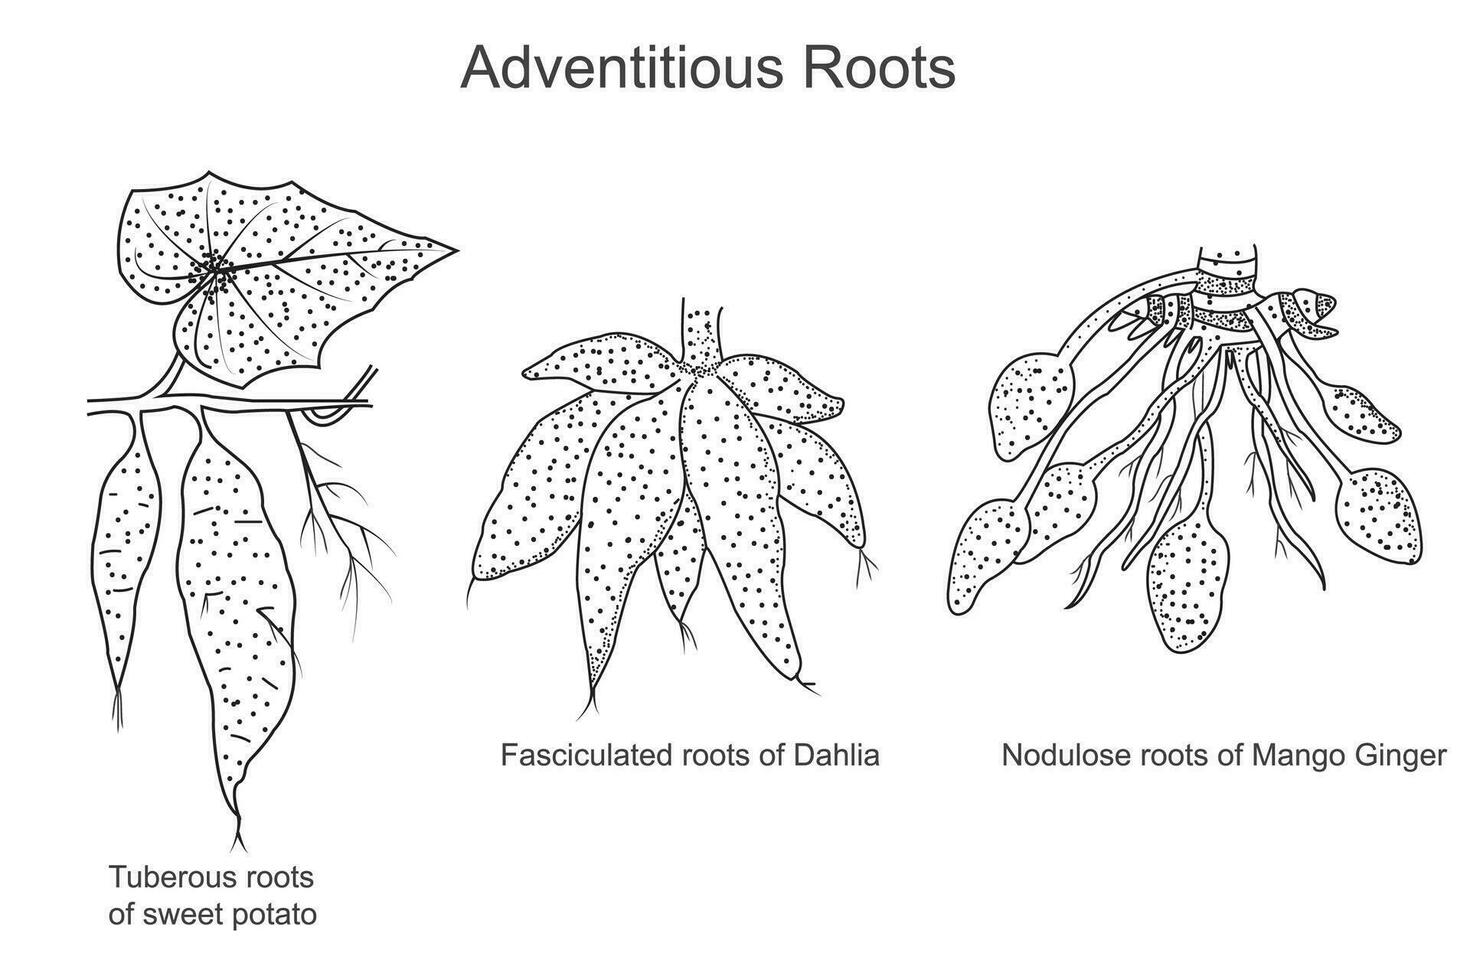 acidental raízes, tuberoso, fasciculado e noduloso raízes, doce batata, dália, manga ruivo, armazenamento do comida, botânica conceito vetor